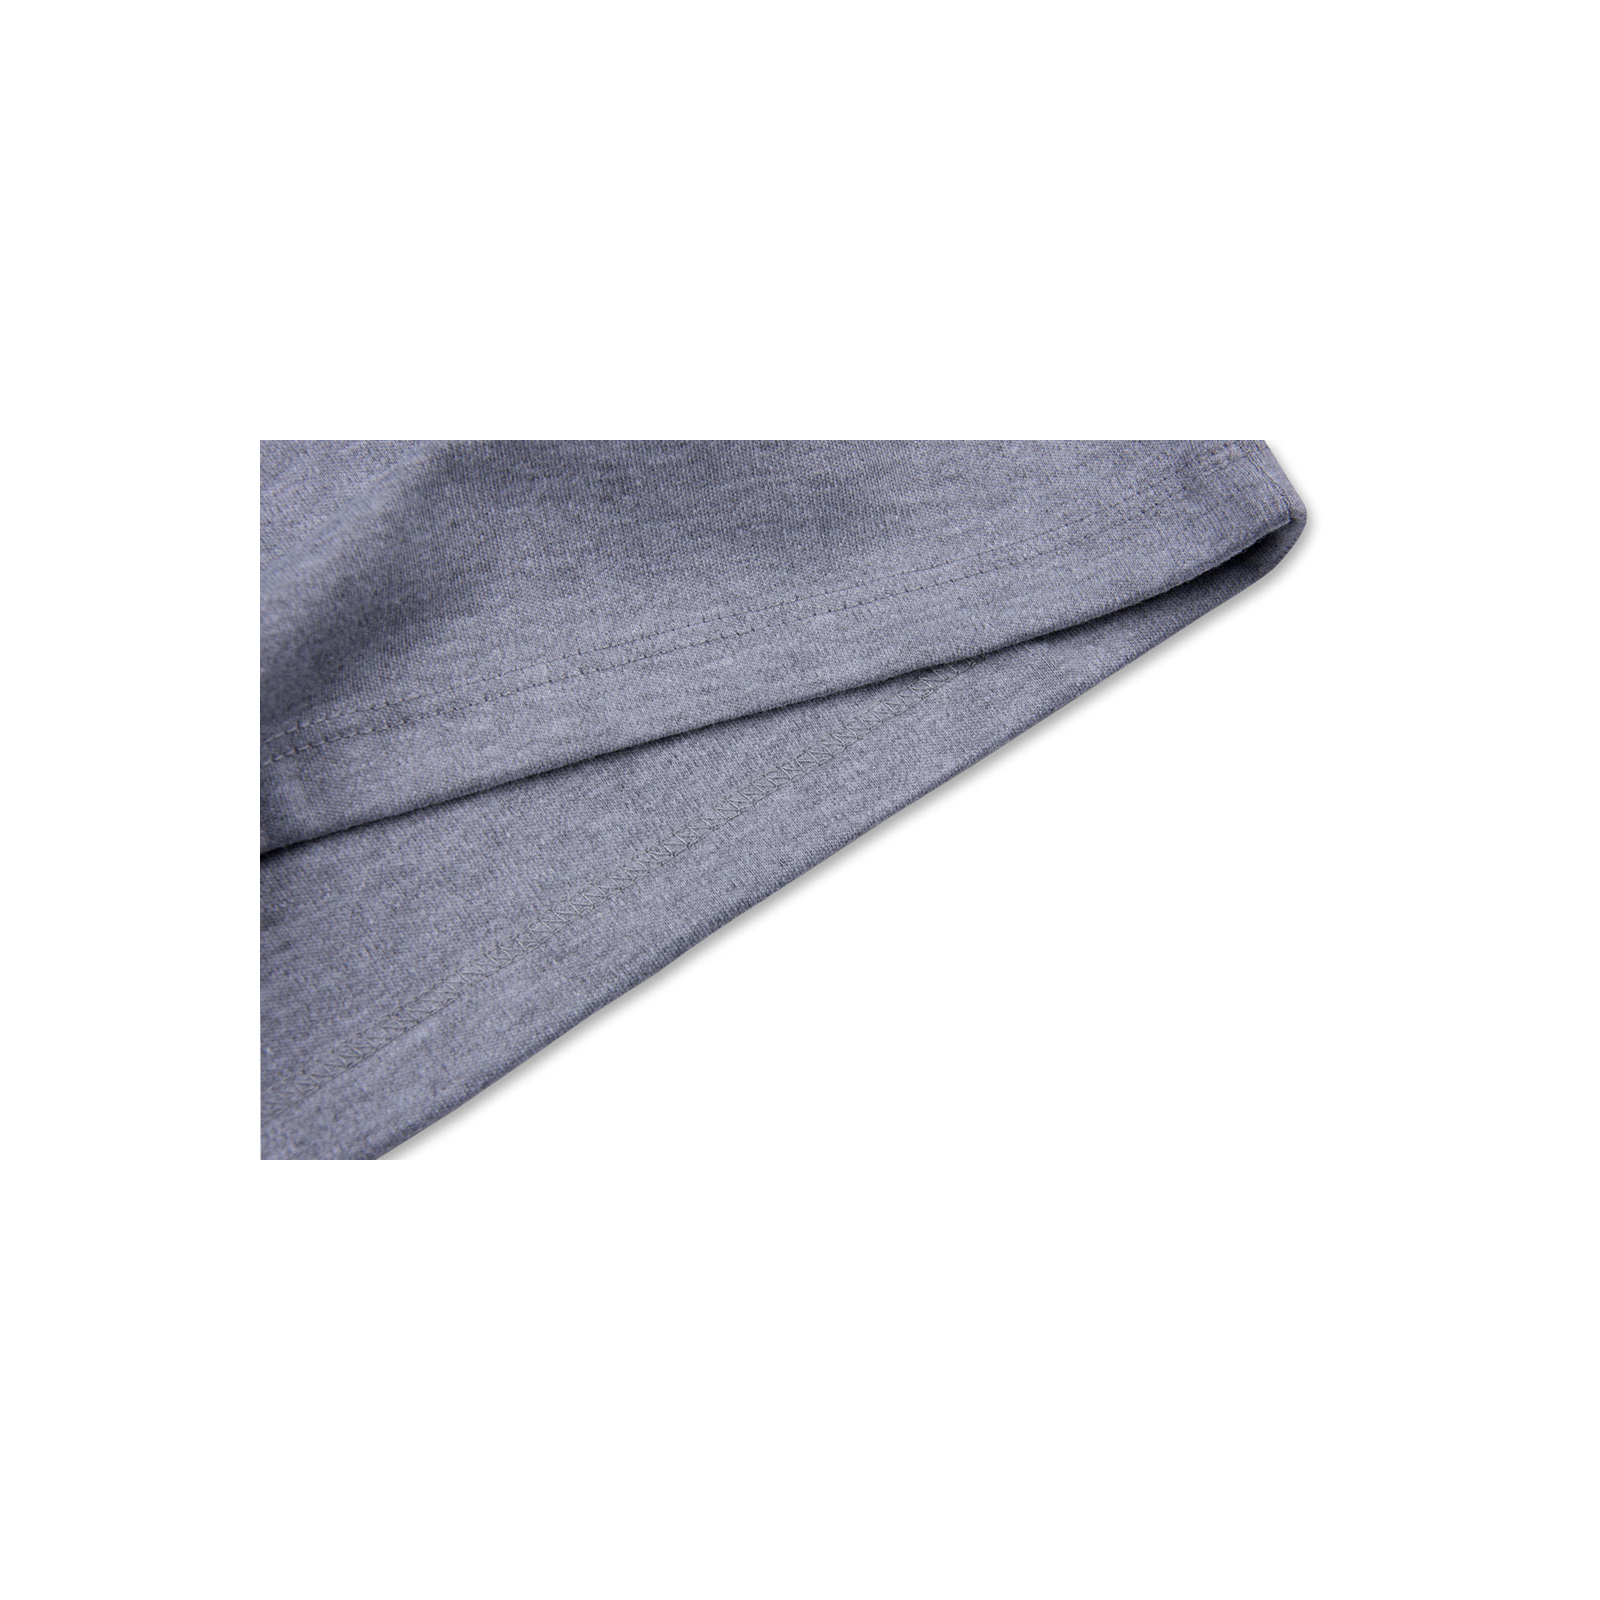 Кофта Lovetti водолазка серая меланжевая (1012-110-gray) изображение 5